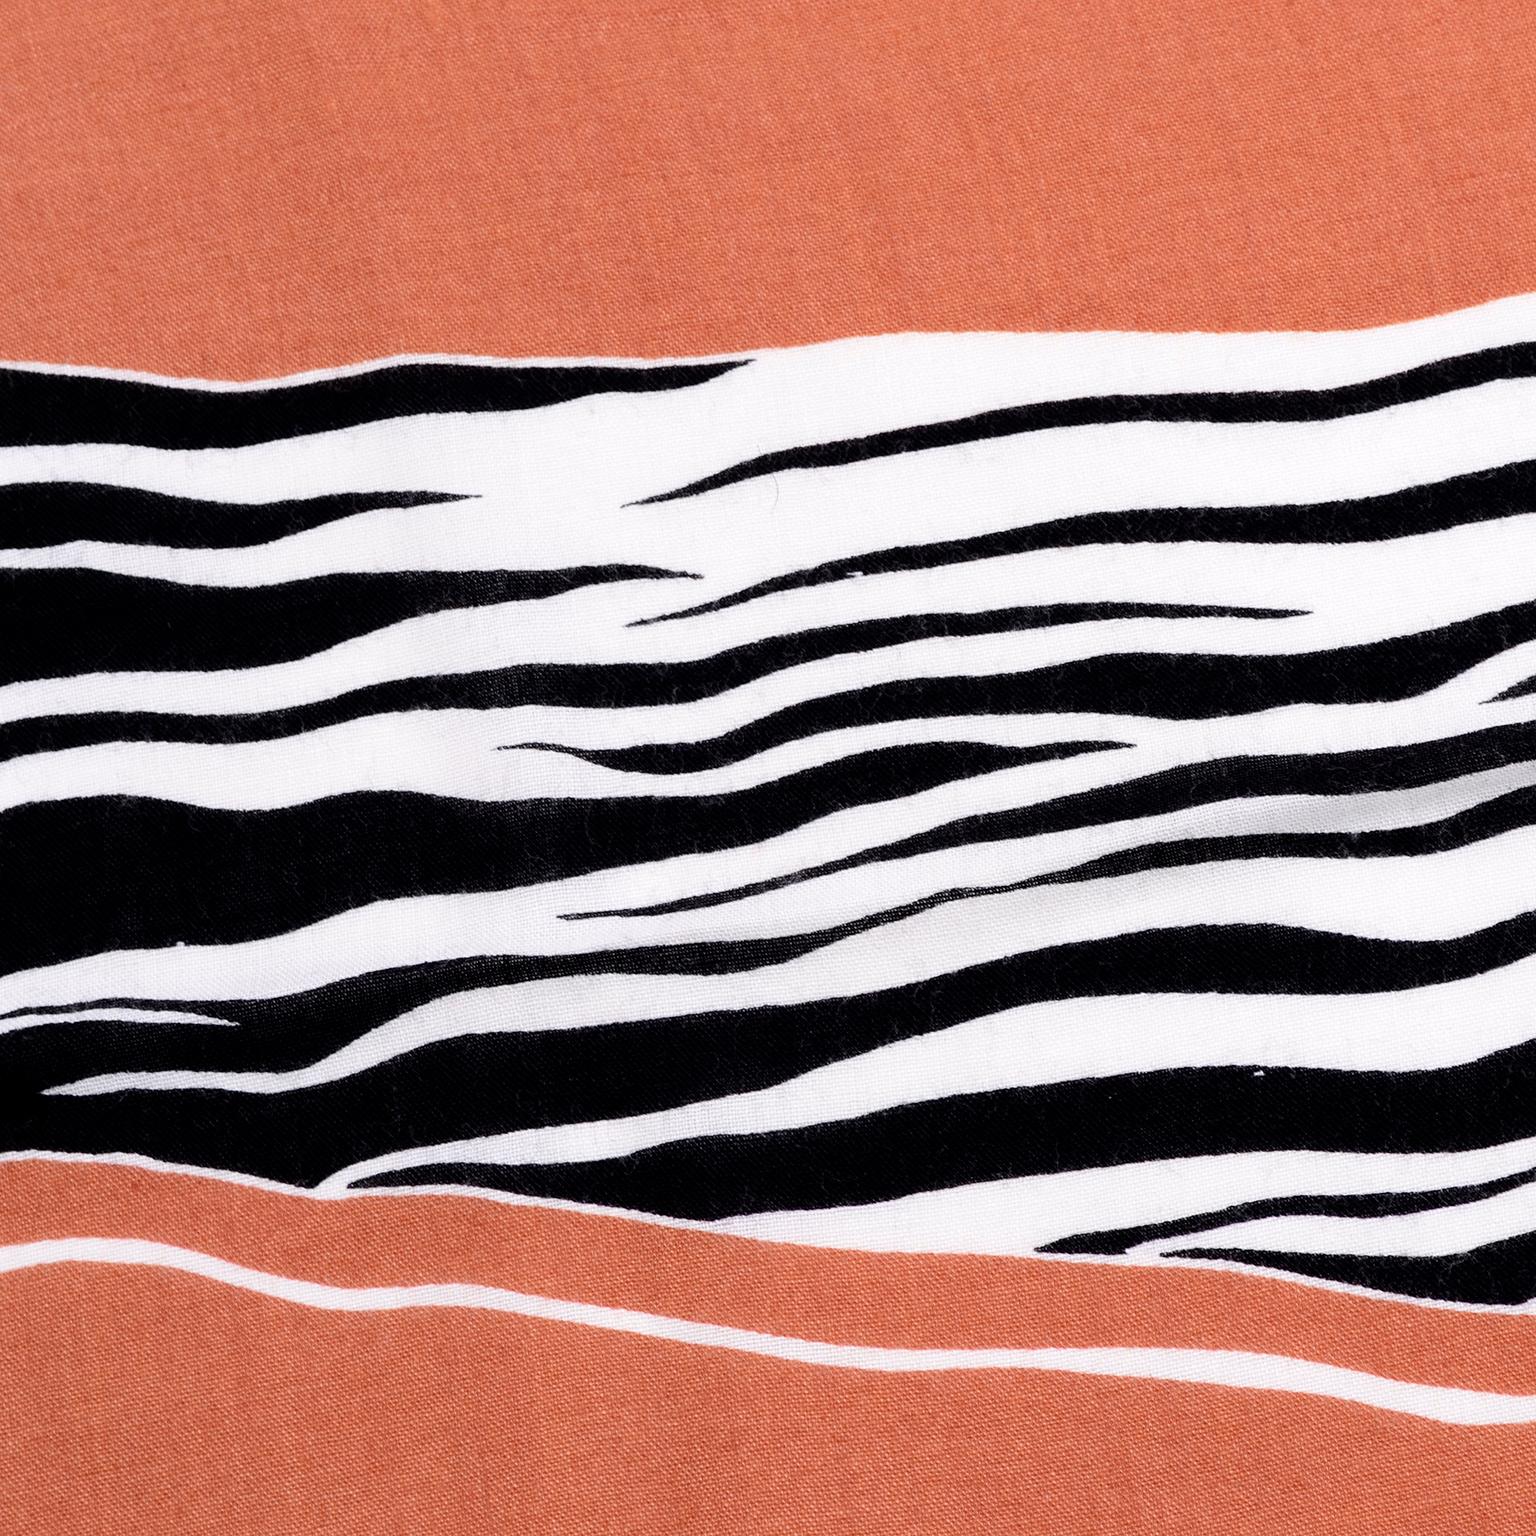 Beige Oscar de la Renta Vintage Scarf in Tan Brown Black and White Zebra Print